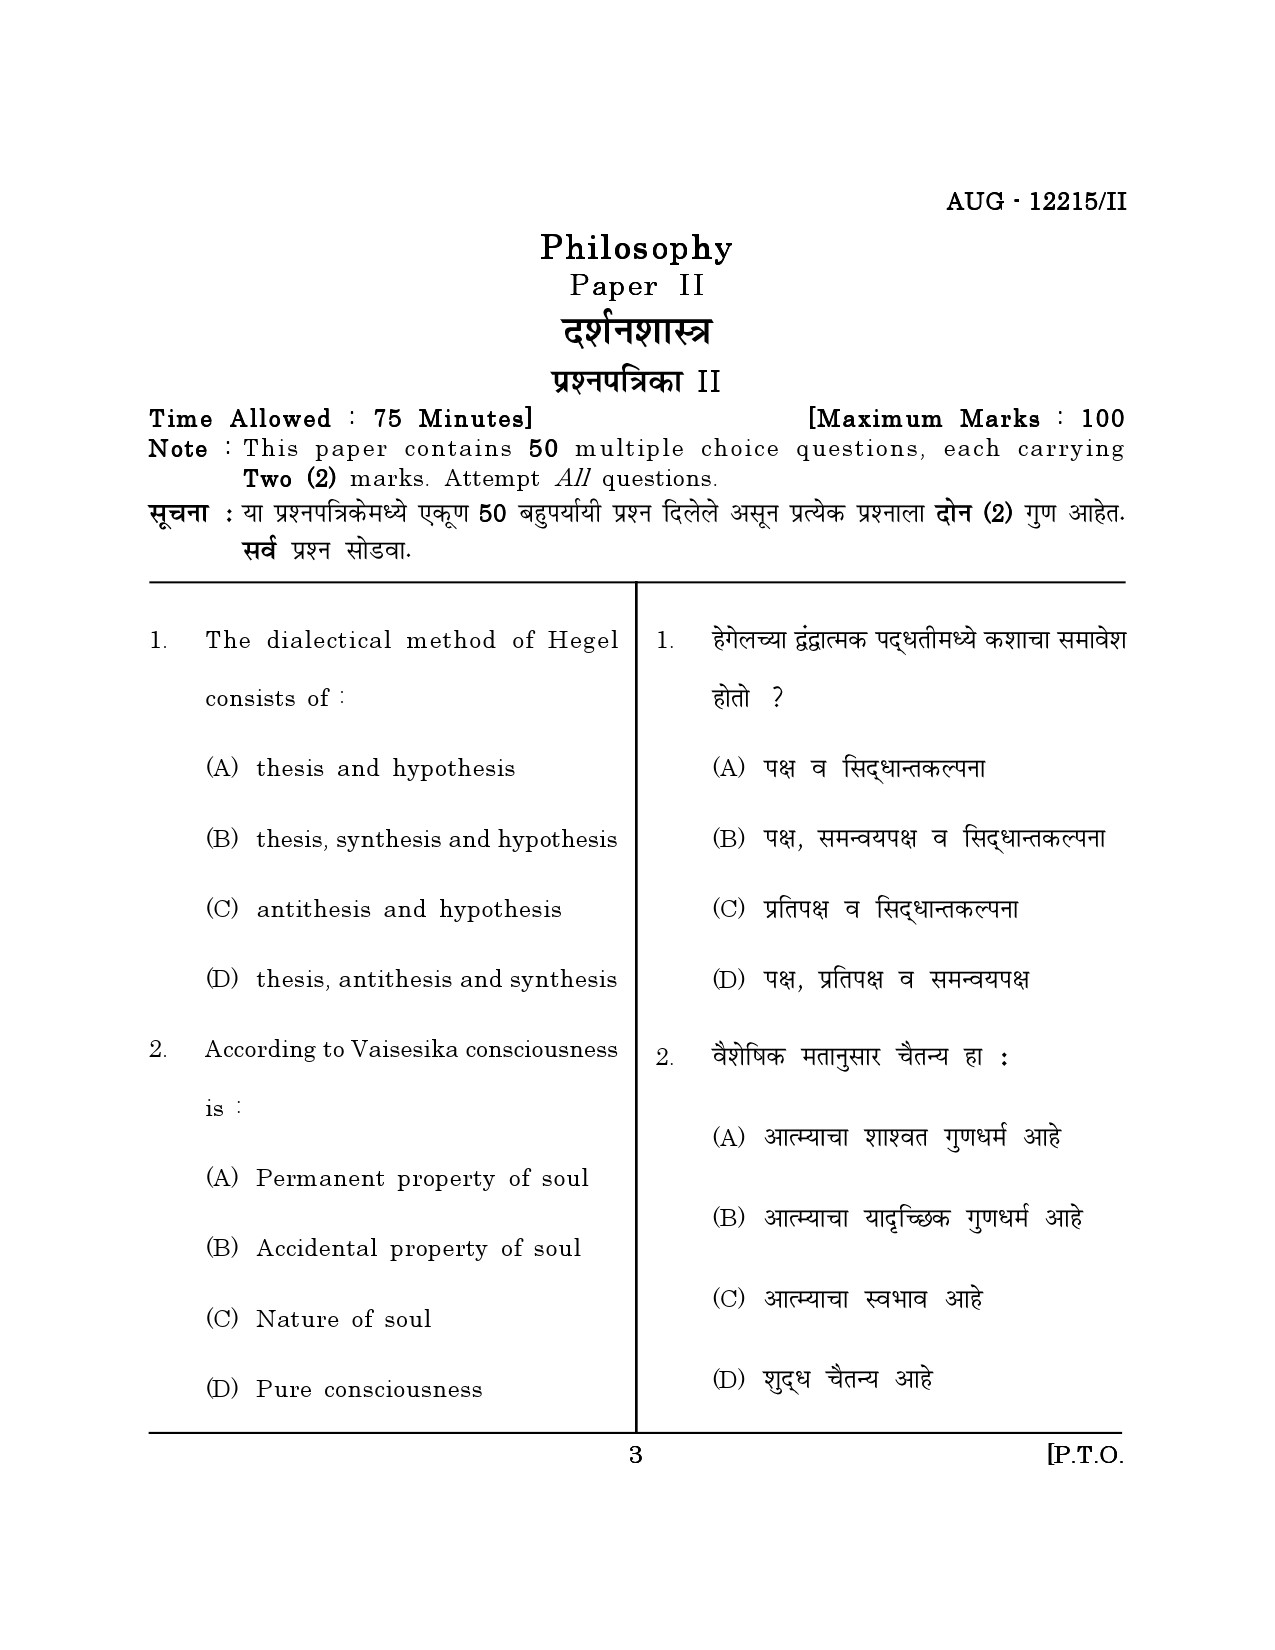 Maharashtra SET Philosophy Question Paper II August 2015 2